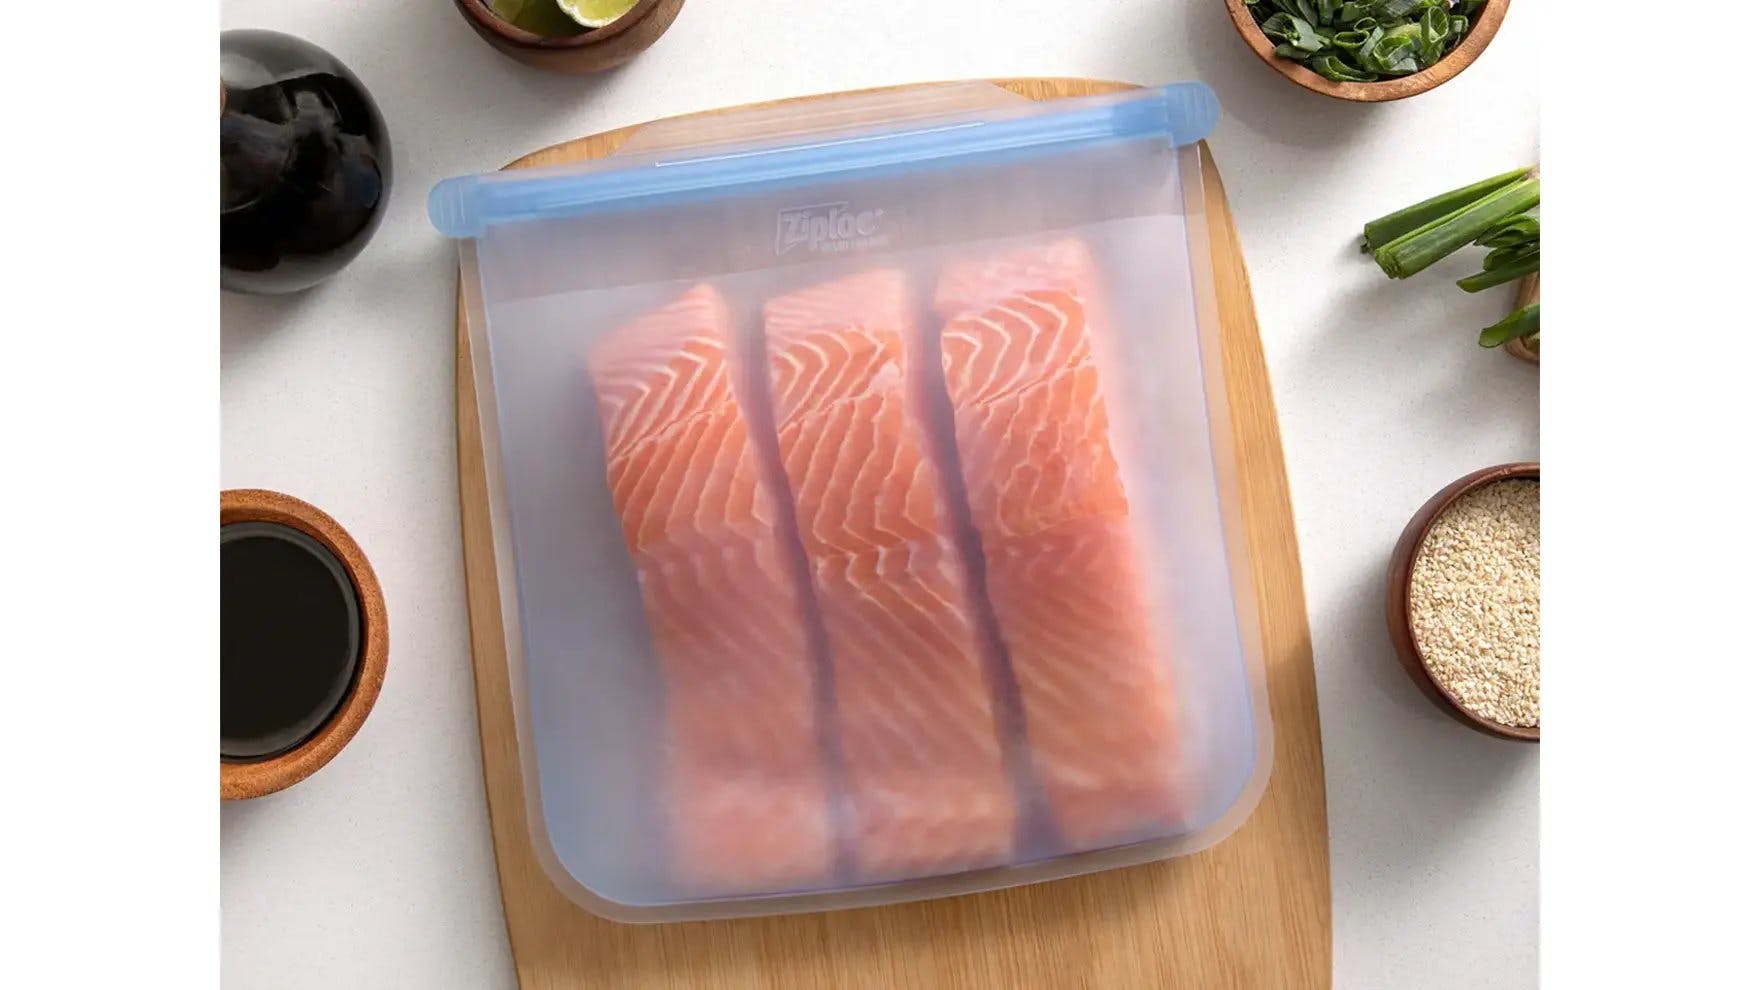 Salmon filets in Ziploc Endurables pouch on cutting board.